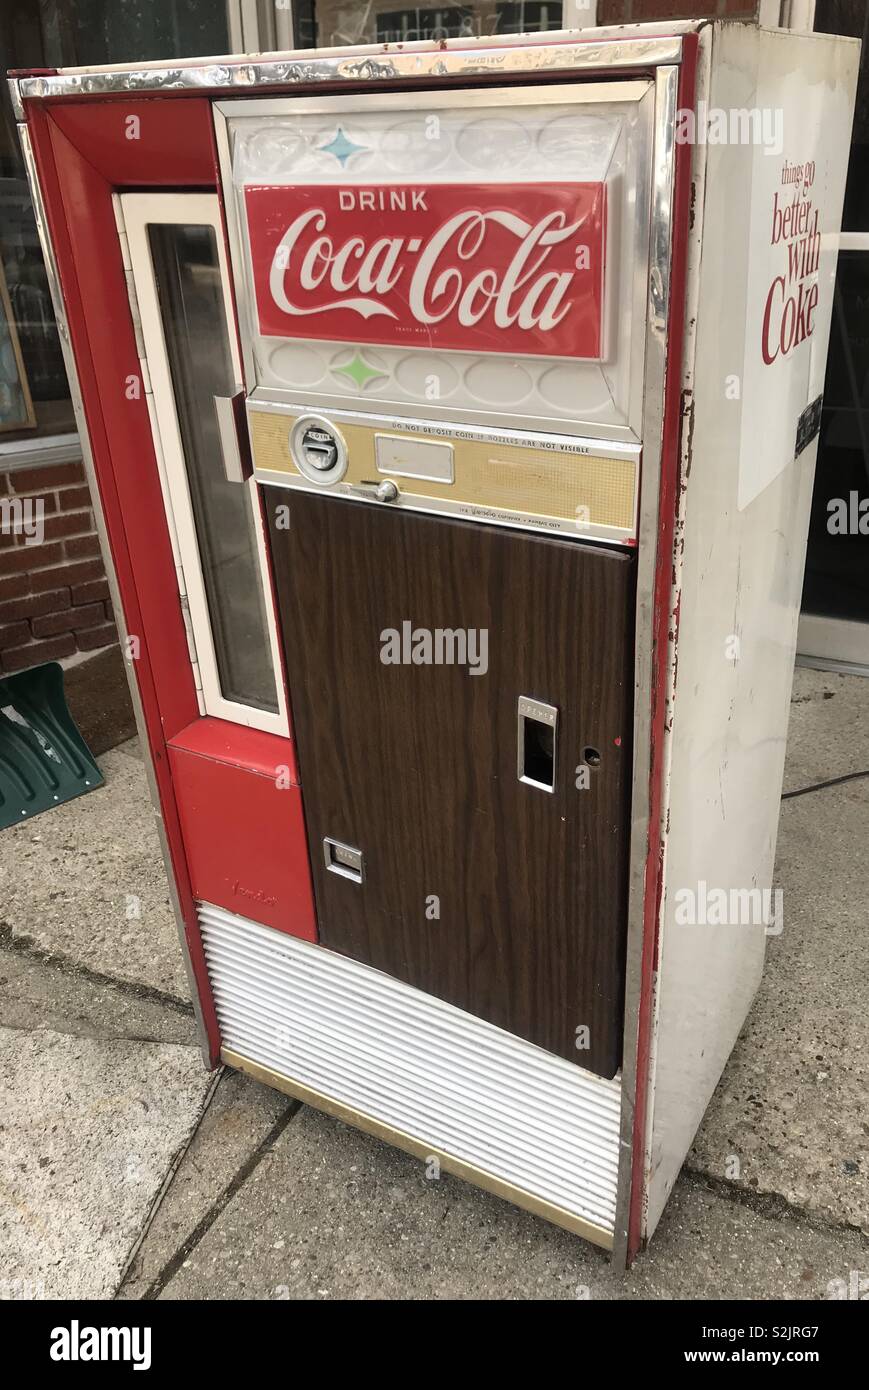 Vintage Coca-Cola Soda Machine at antique store Stock Photo - Alamy